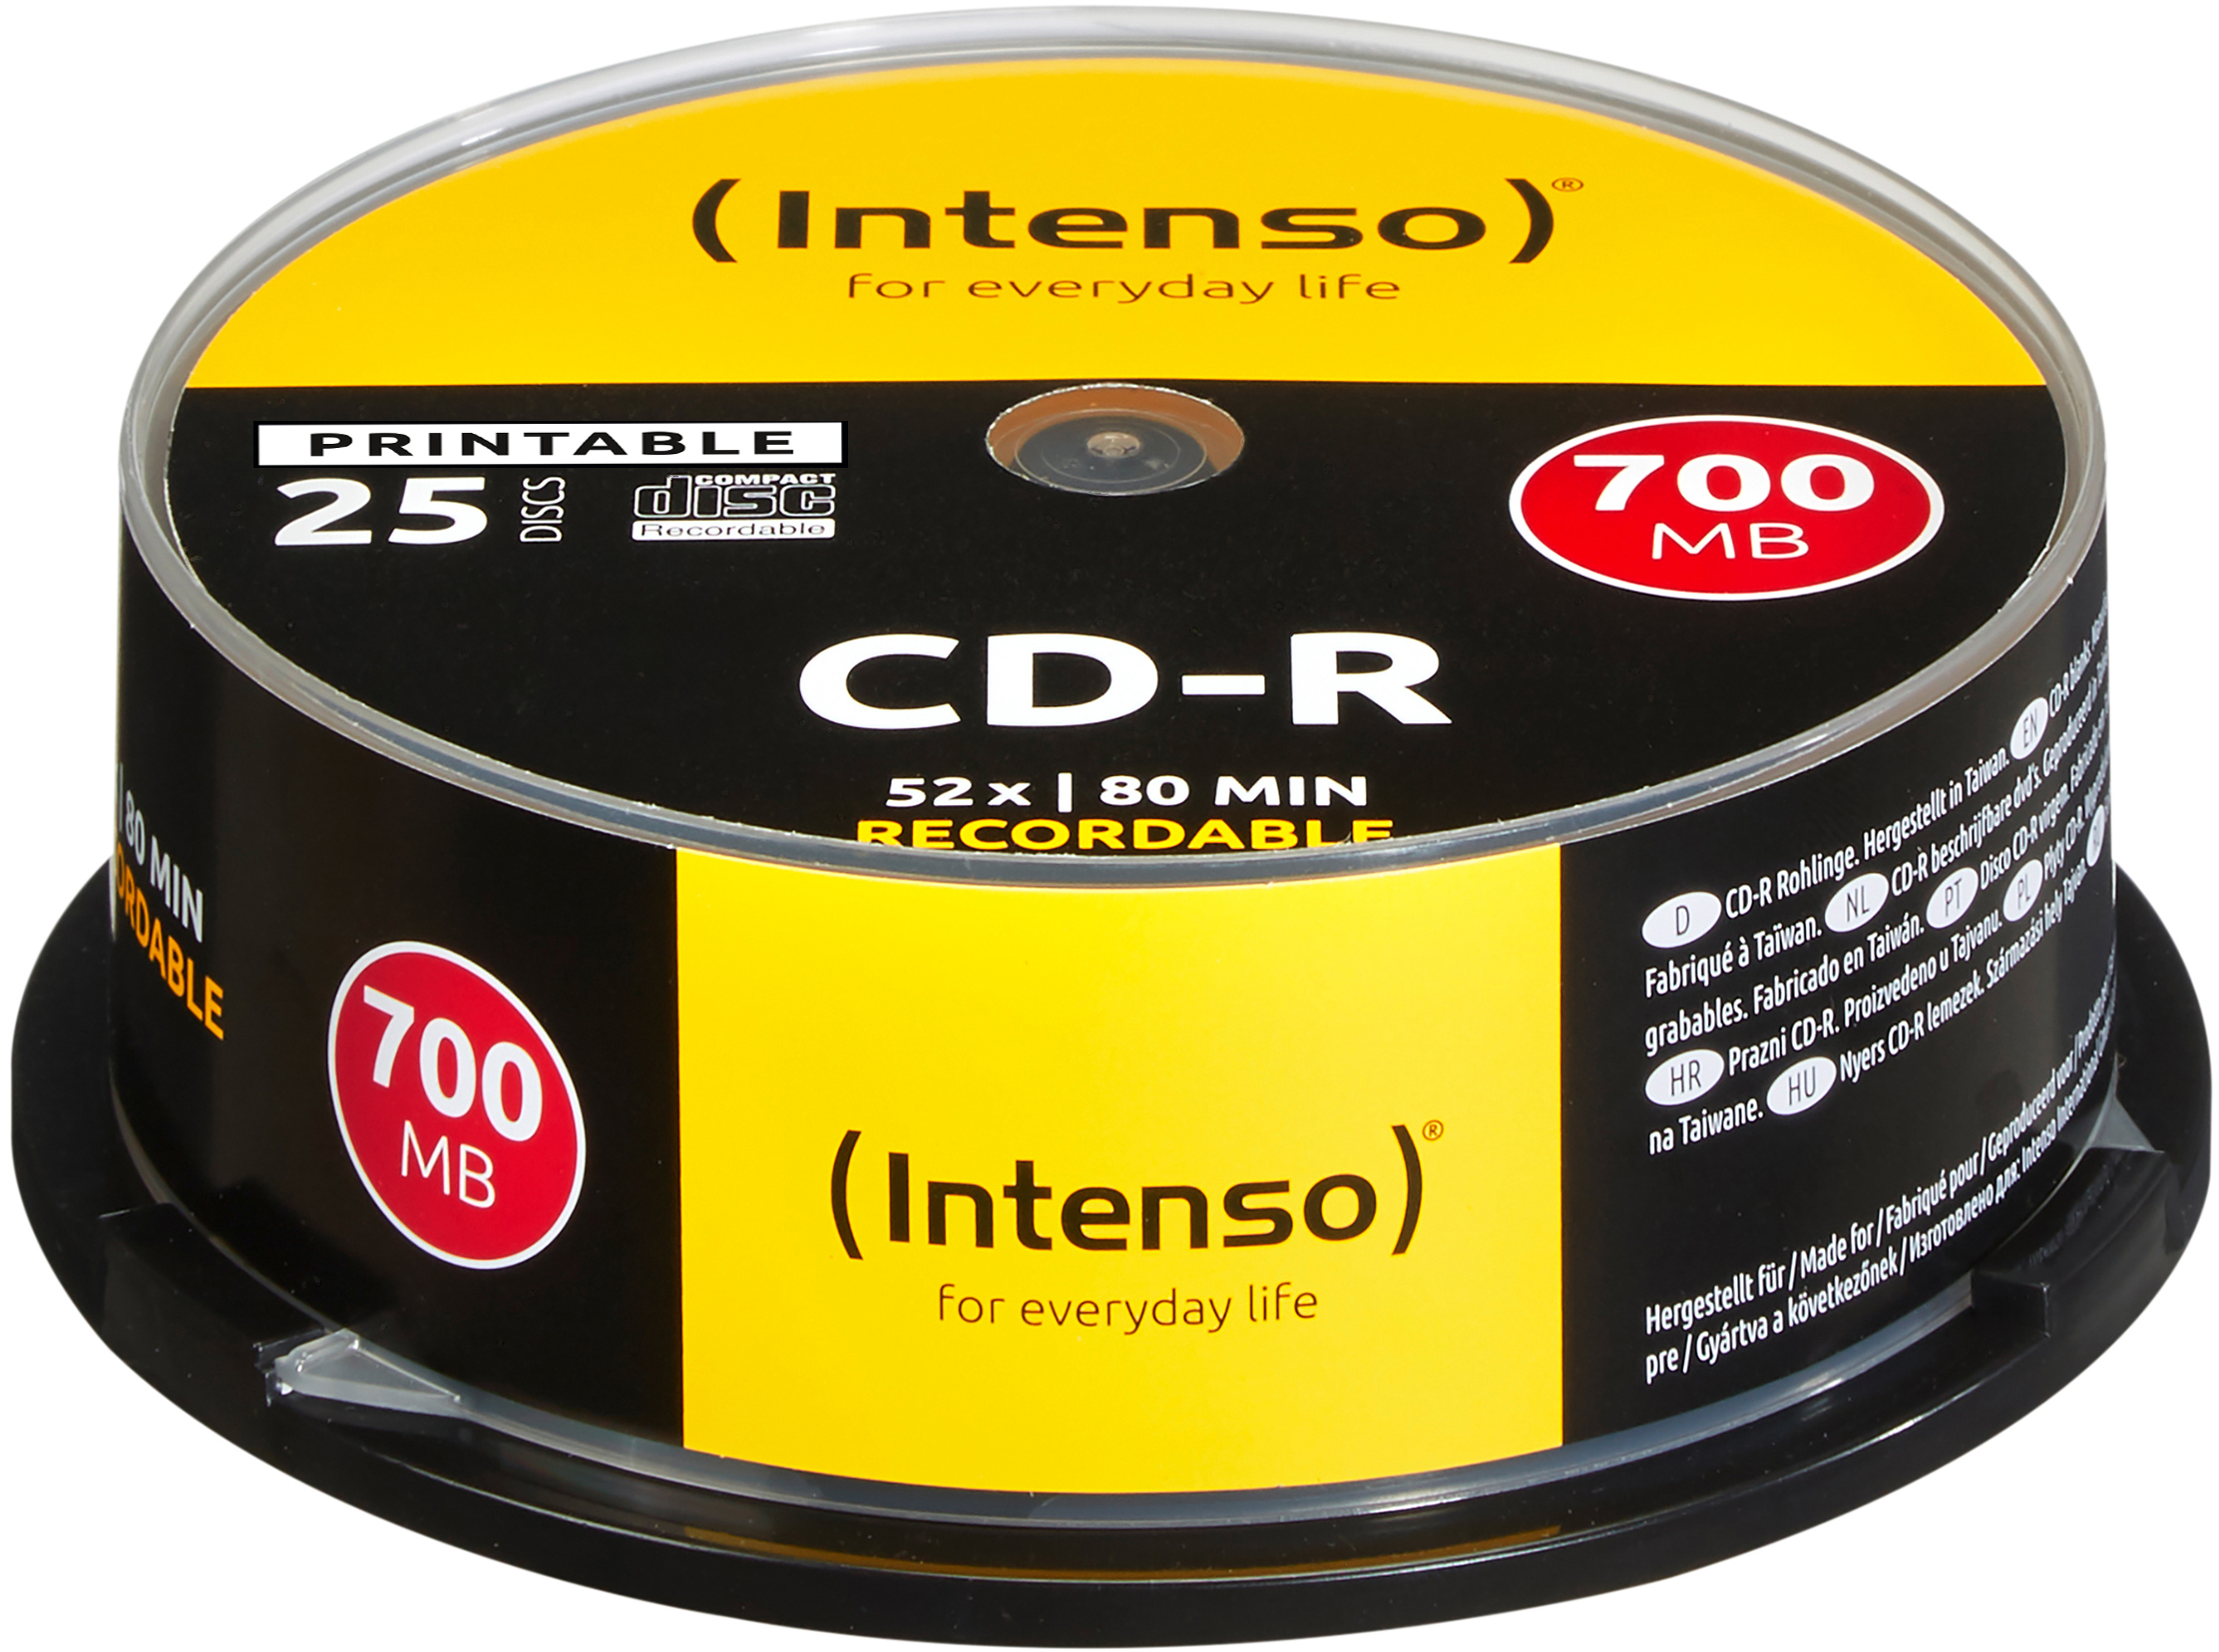 INTENSO CD-R Cake Box 80MIN/700MB 1801124 52x Printable 25 Pcs 52x Printable 25 Pcs